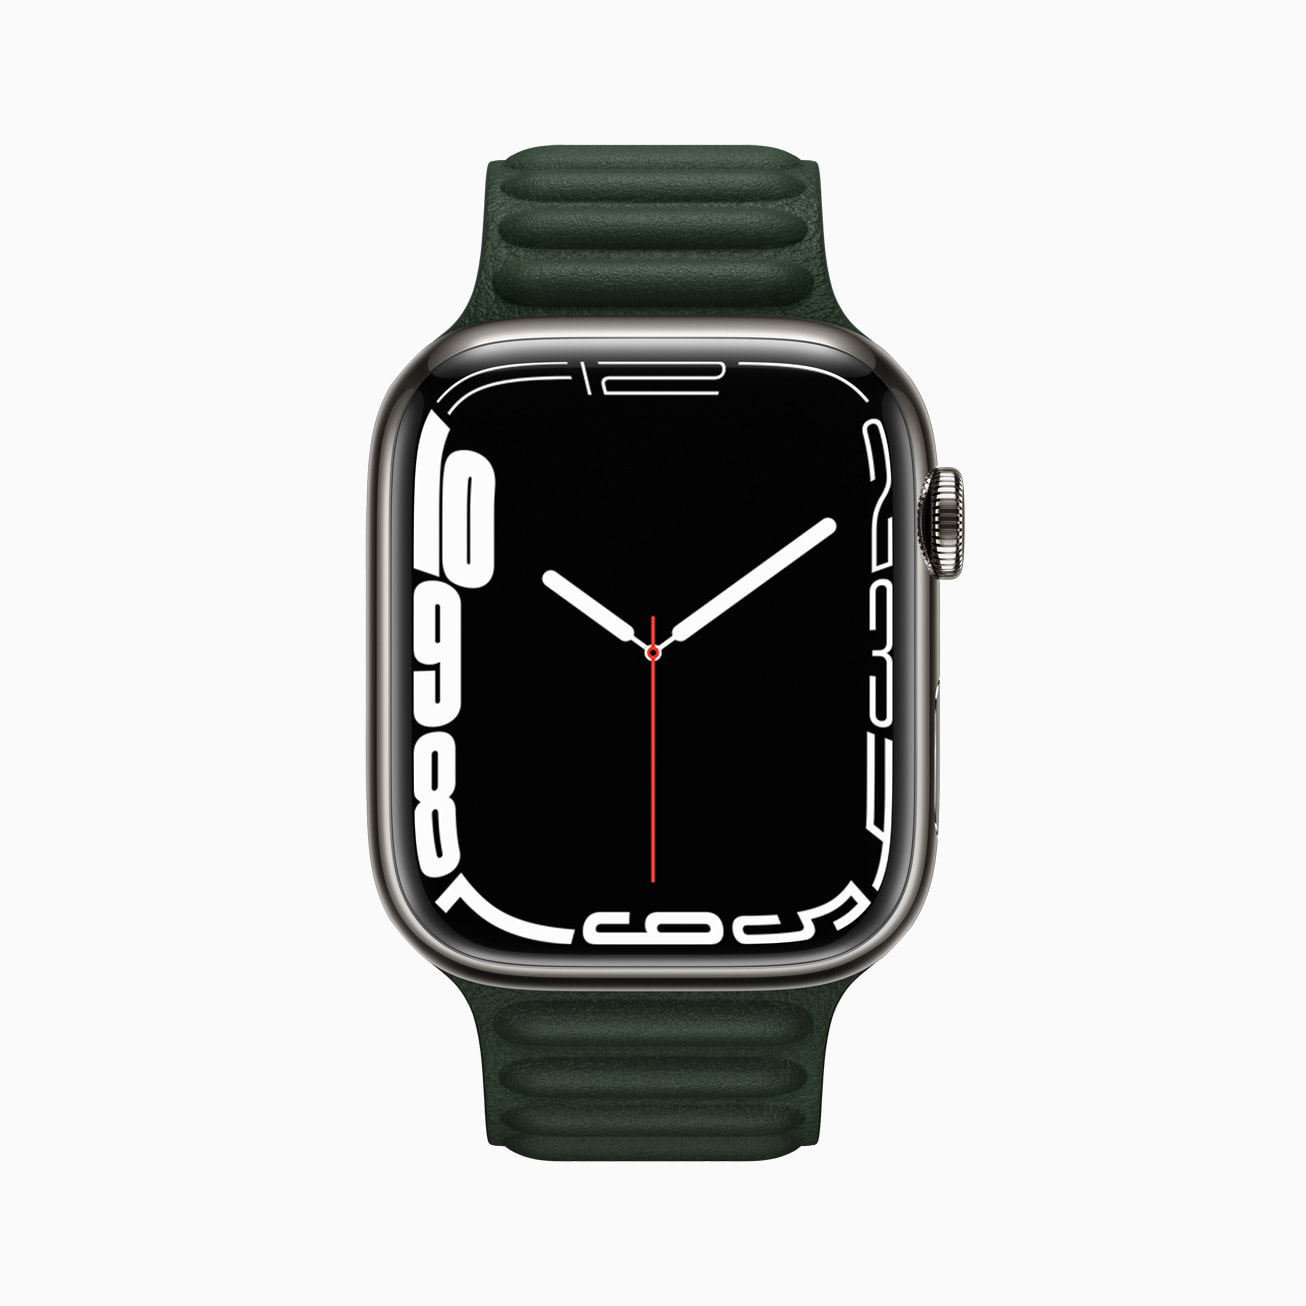 Apple Watch Contour Face Press